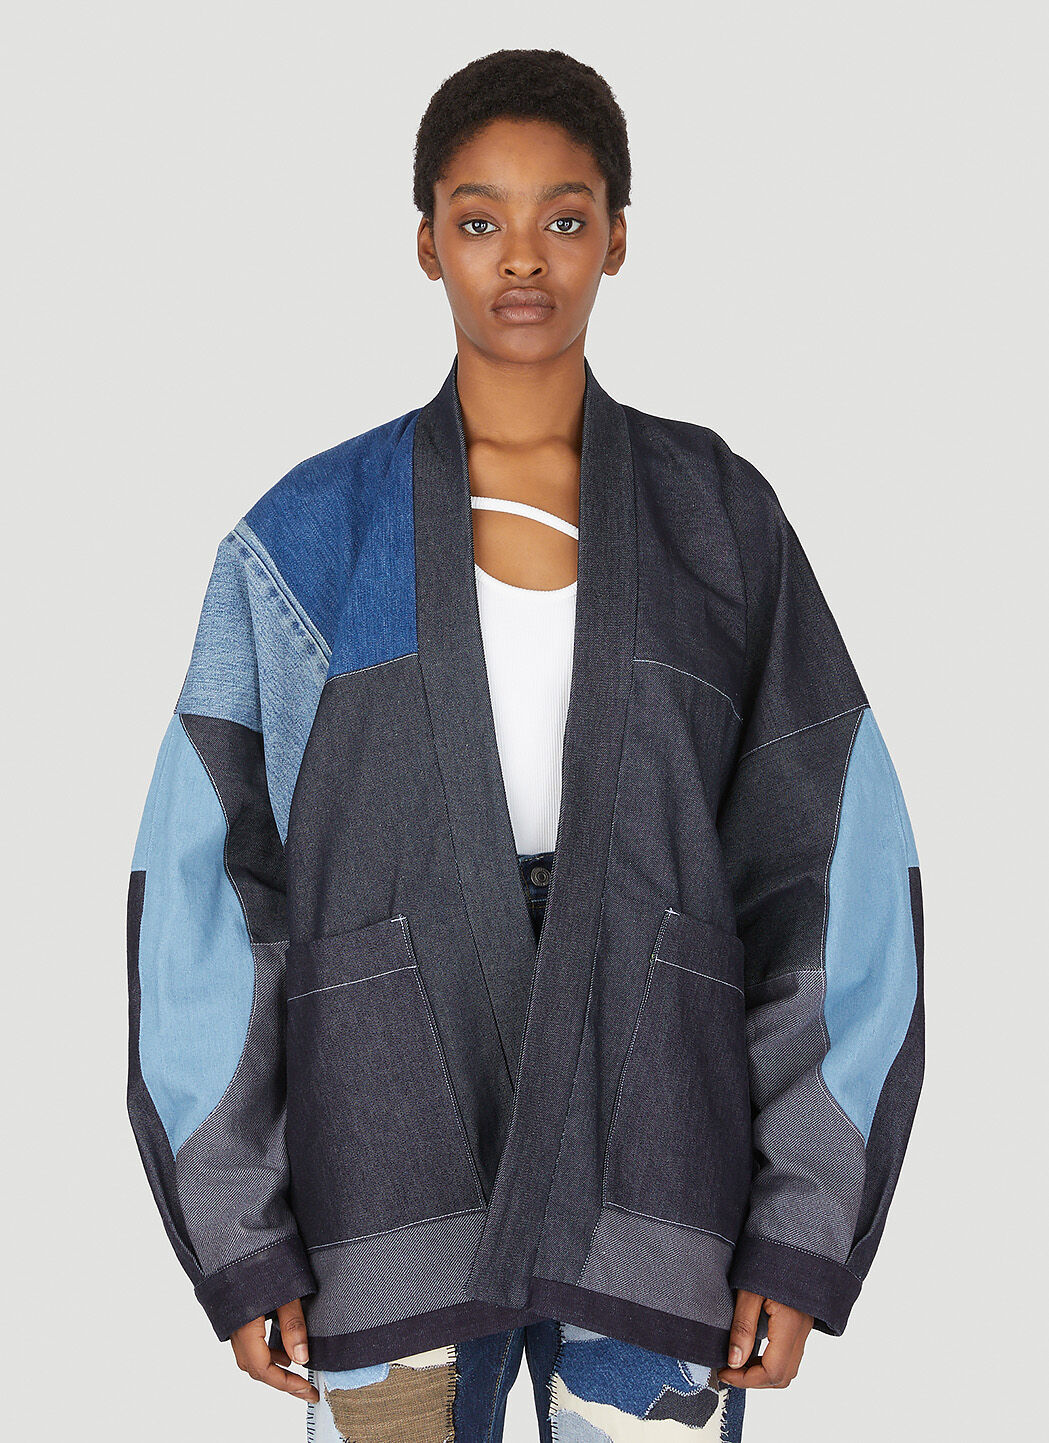 Acne Studios Drop 6 Patchwork Kimono Jacket Black acn0355002